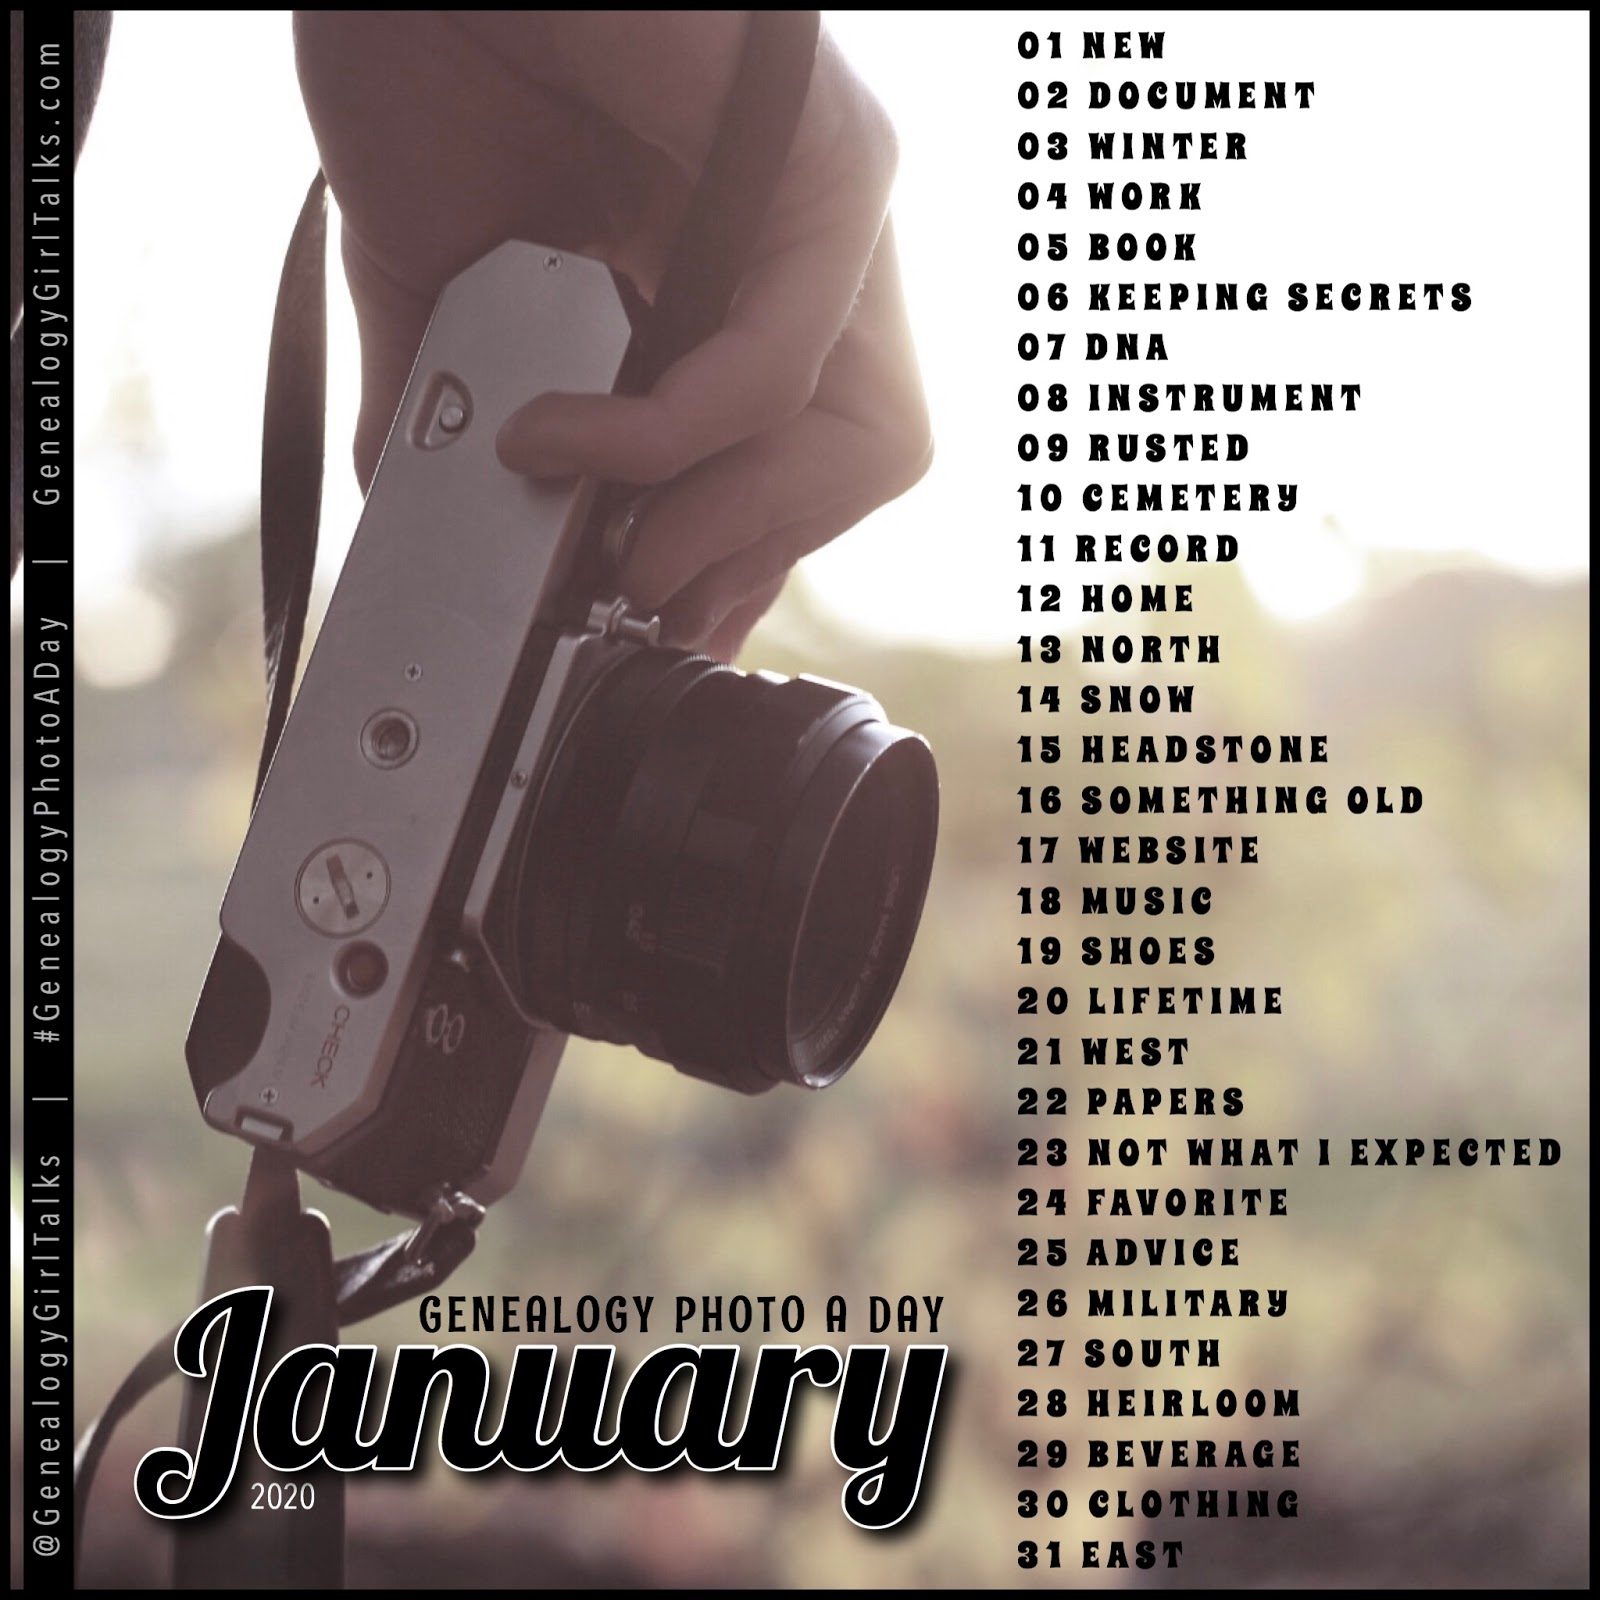 January 2020 Genealogy Photo A Day daily prompts from Genealogy Girl Talks #Genealogy #FamilyHistory #GenealogyPhotoADay